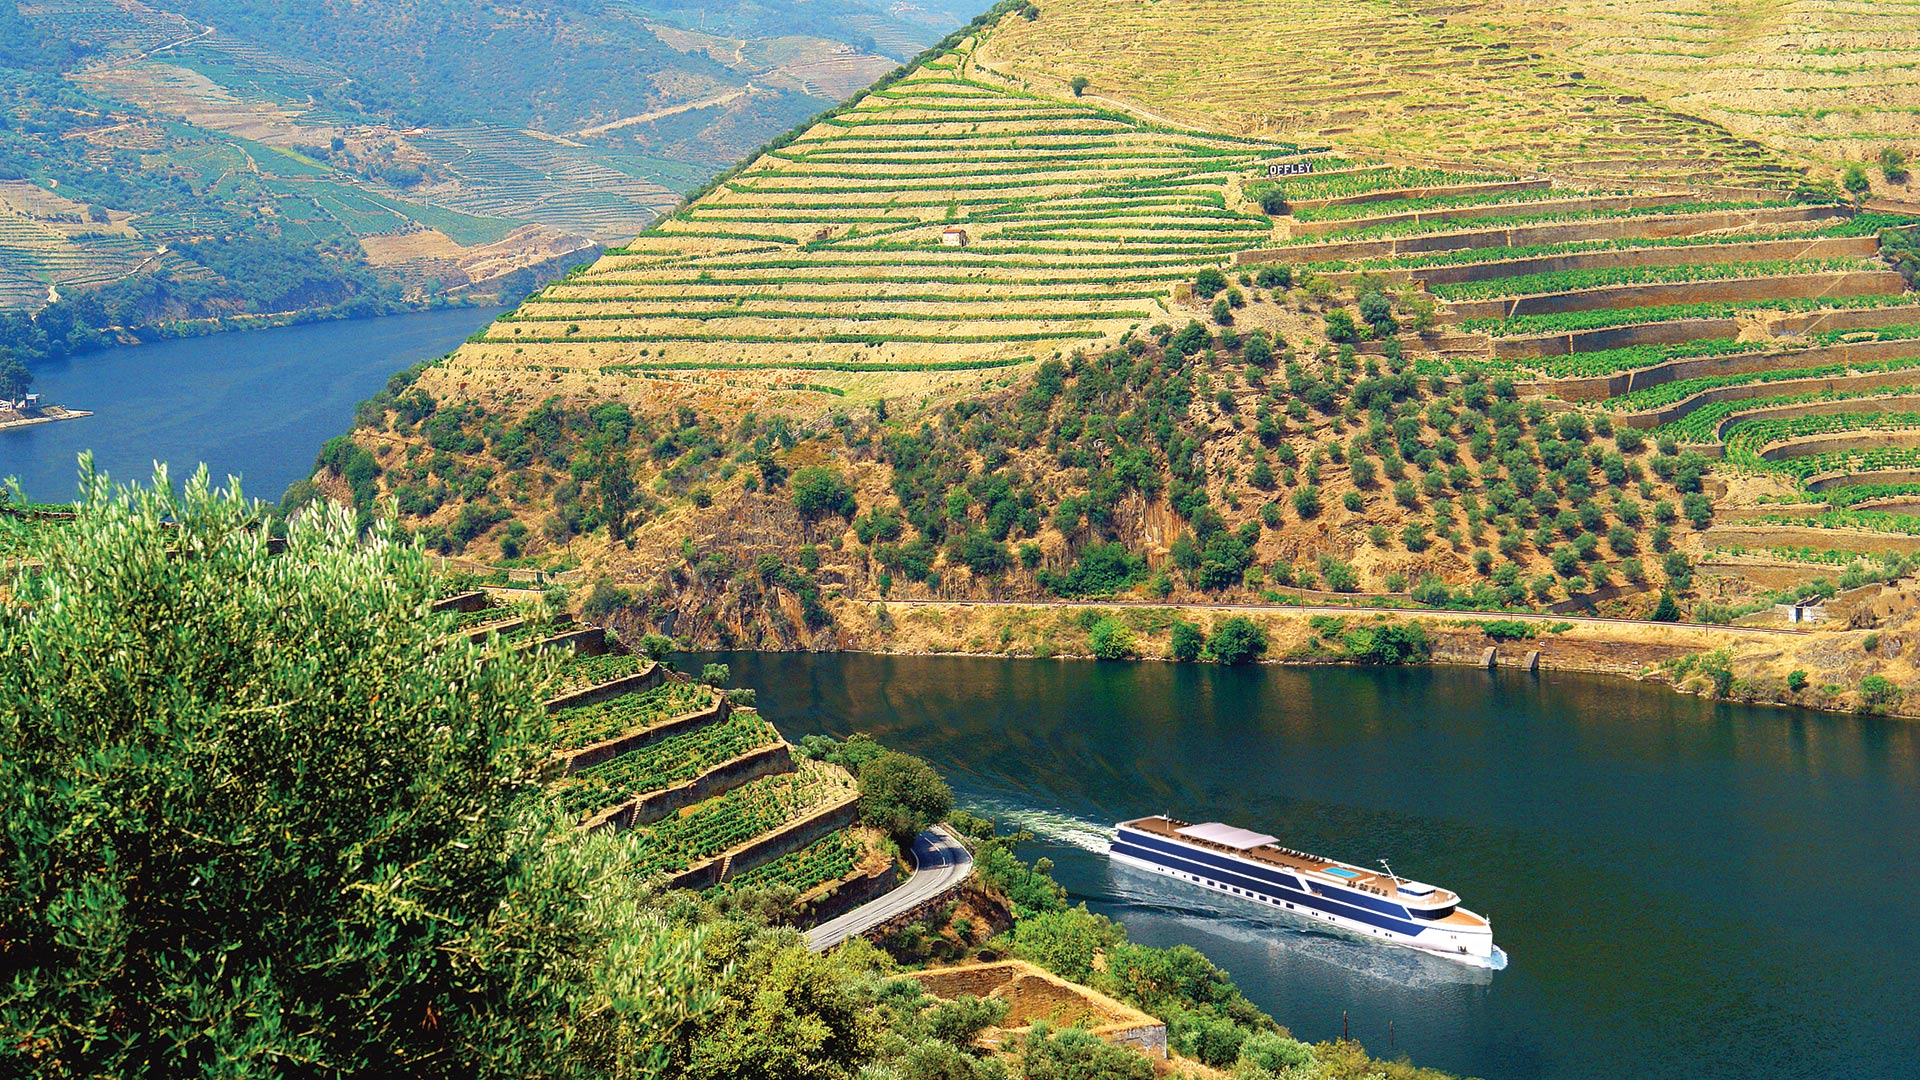 Admire the beautiful scenery aboard the MS Douro Serenity.